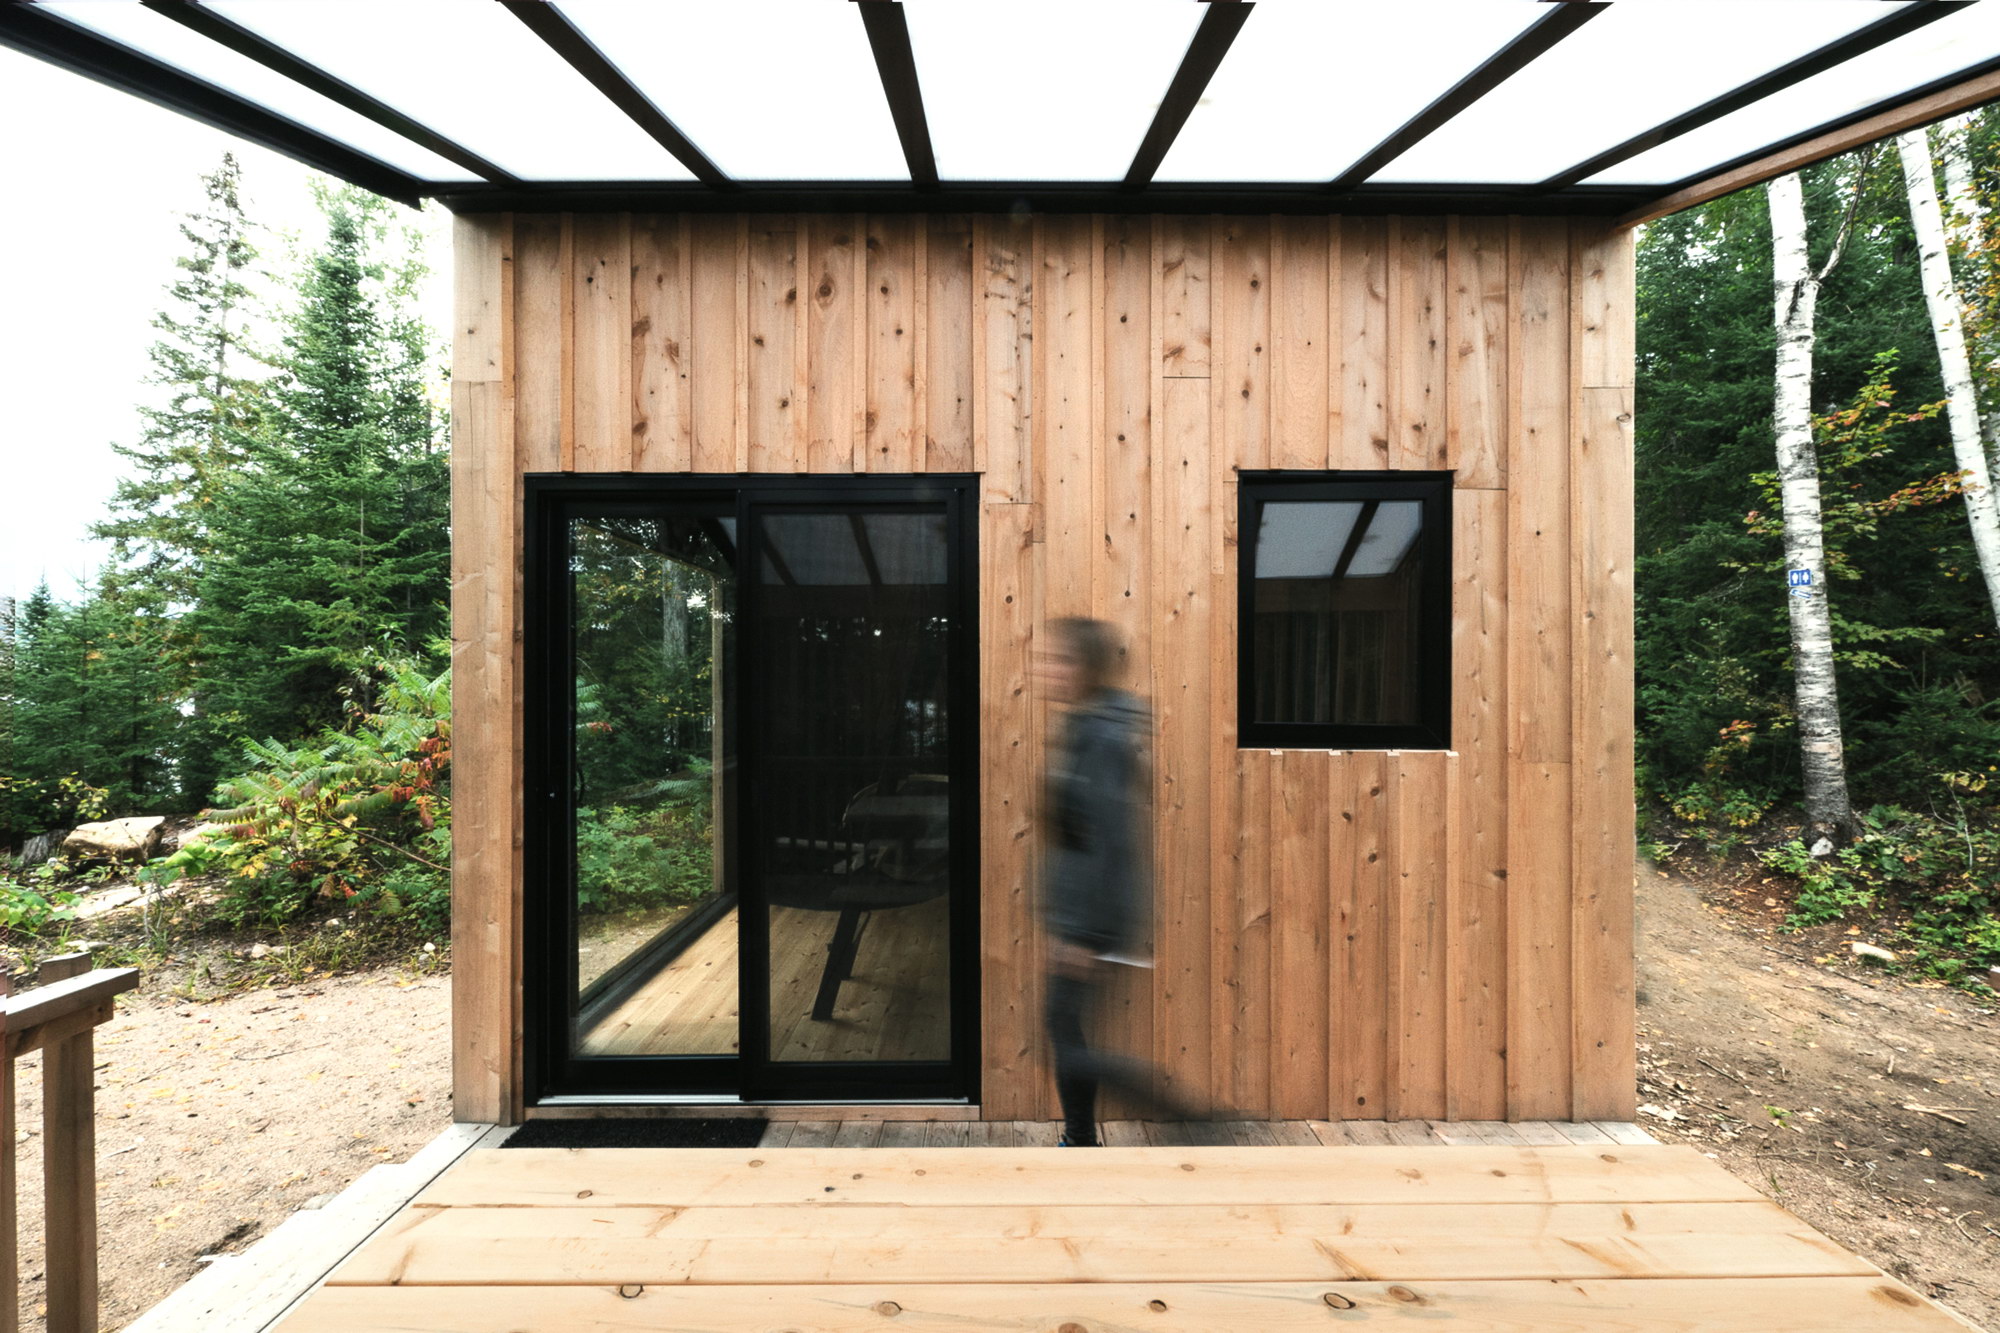 La Pointe | Reinterpretation of an A-Frame Cabin by Atelier L'abri